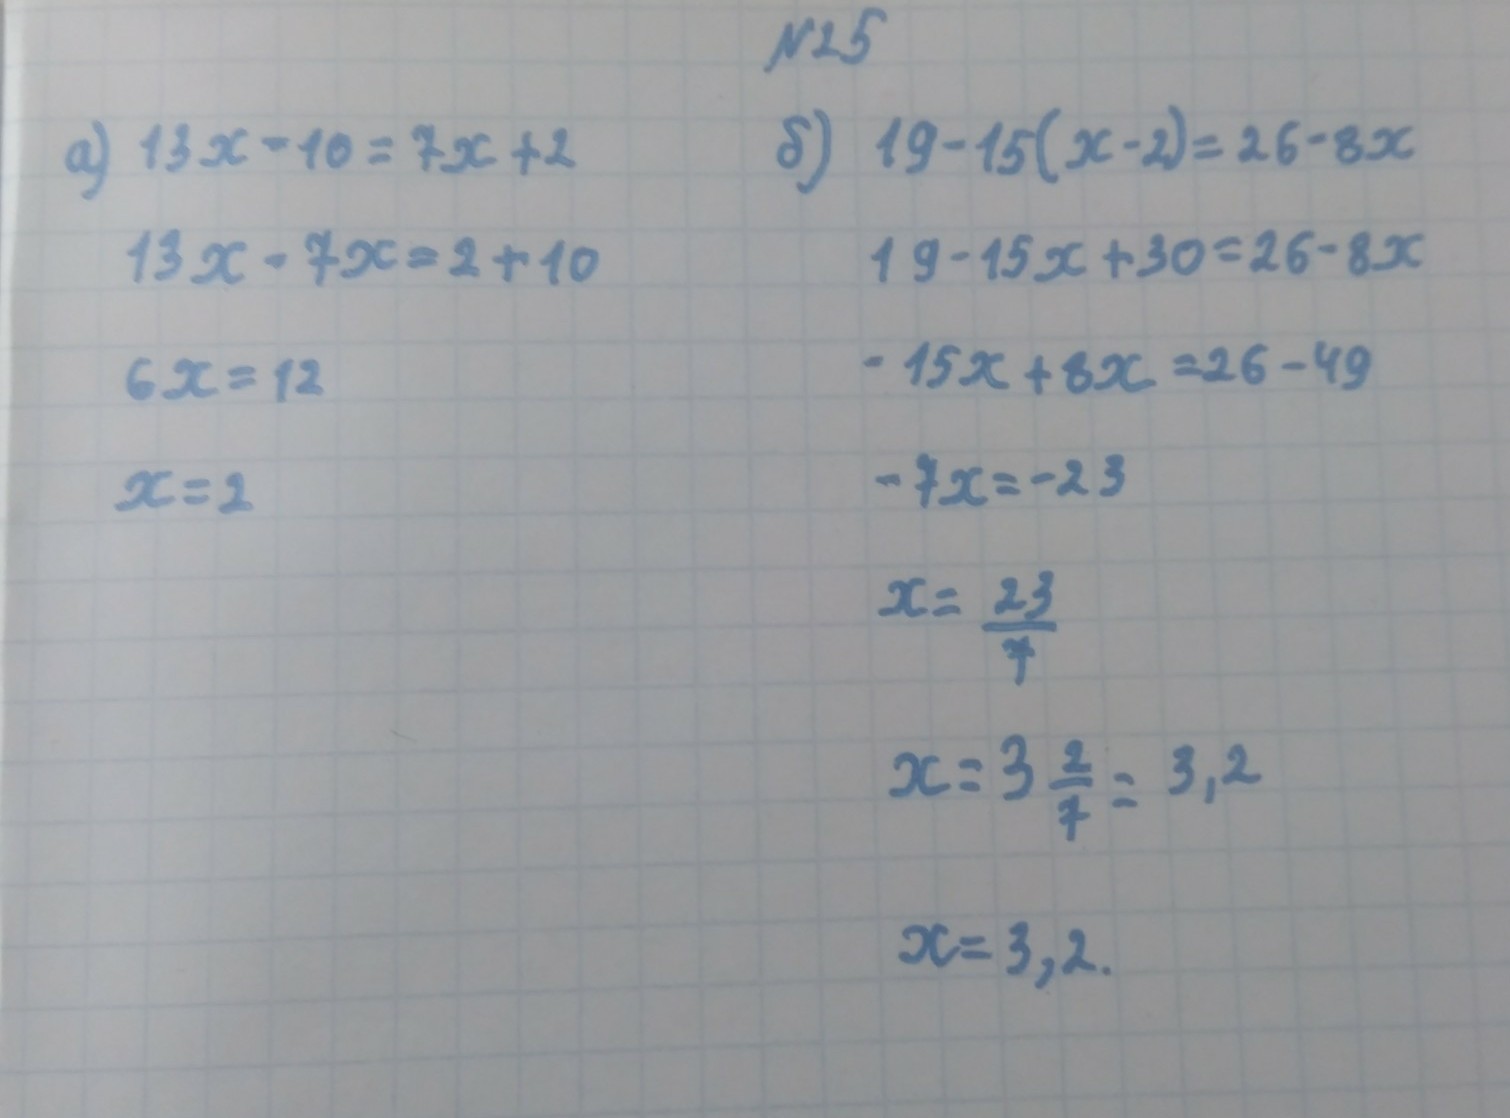 0 5x 13 2 5x 7. 13 X 2 2 X 13 2. (13-Х)(13-X) решение. 13x-26=130 решение. 13х-26 -130 решить.